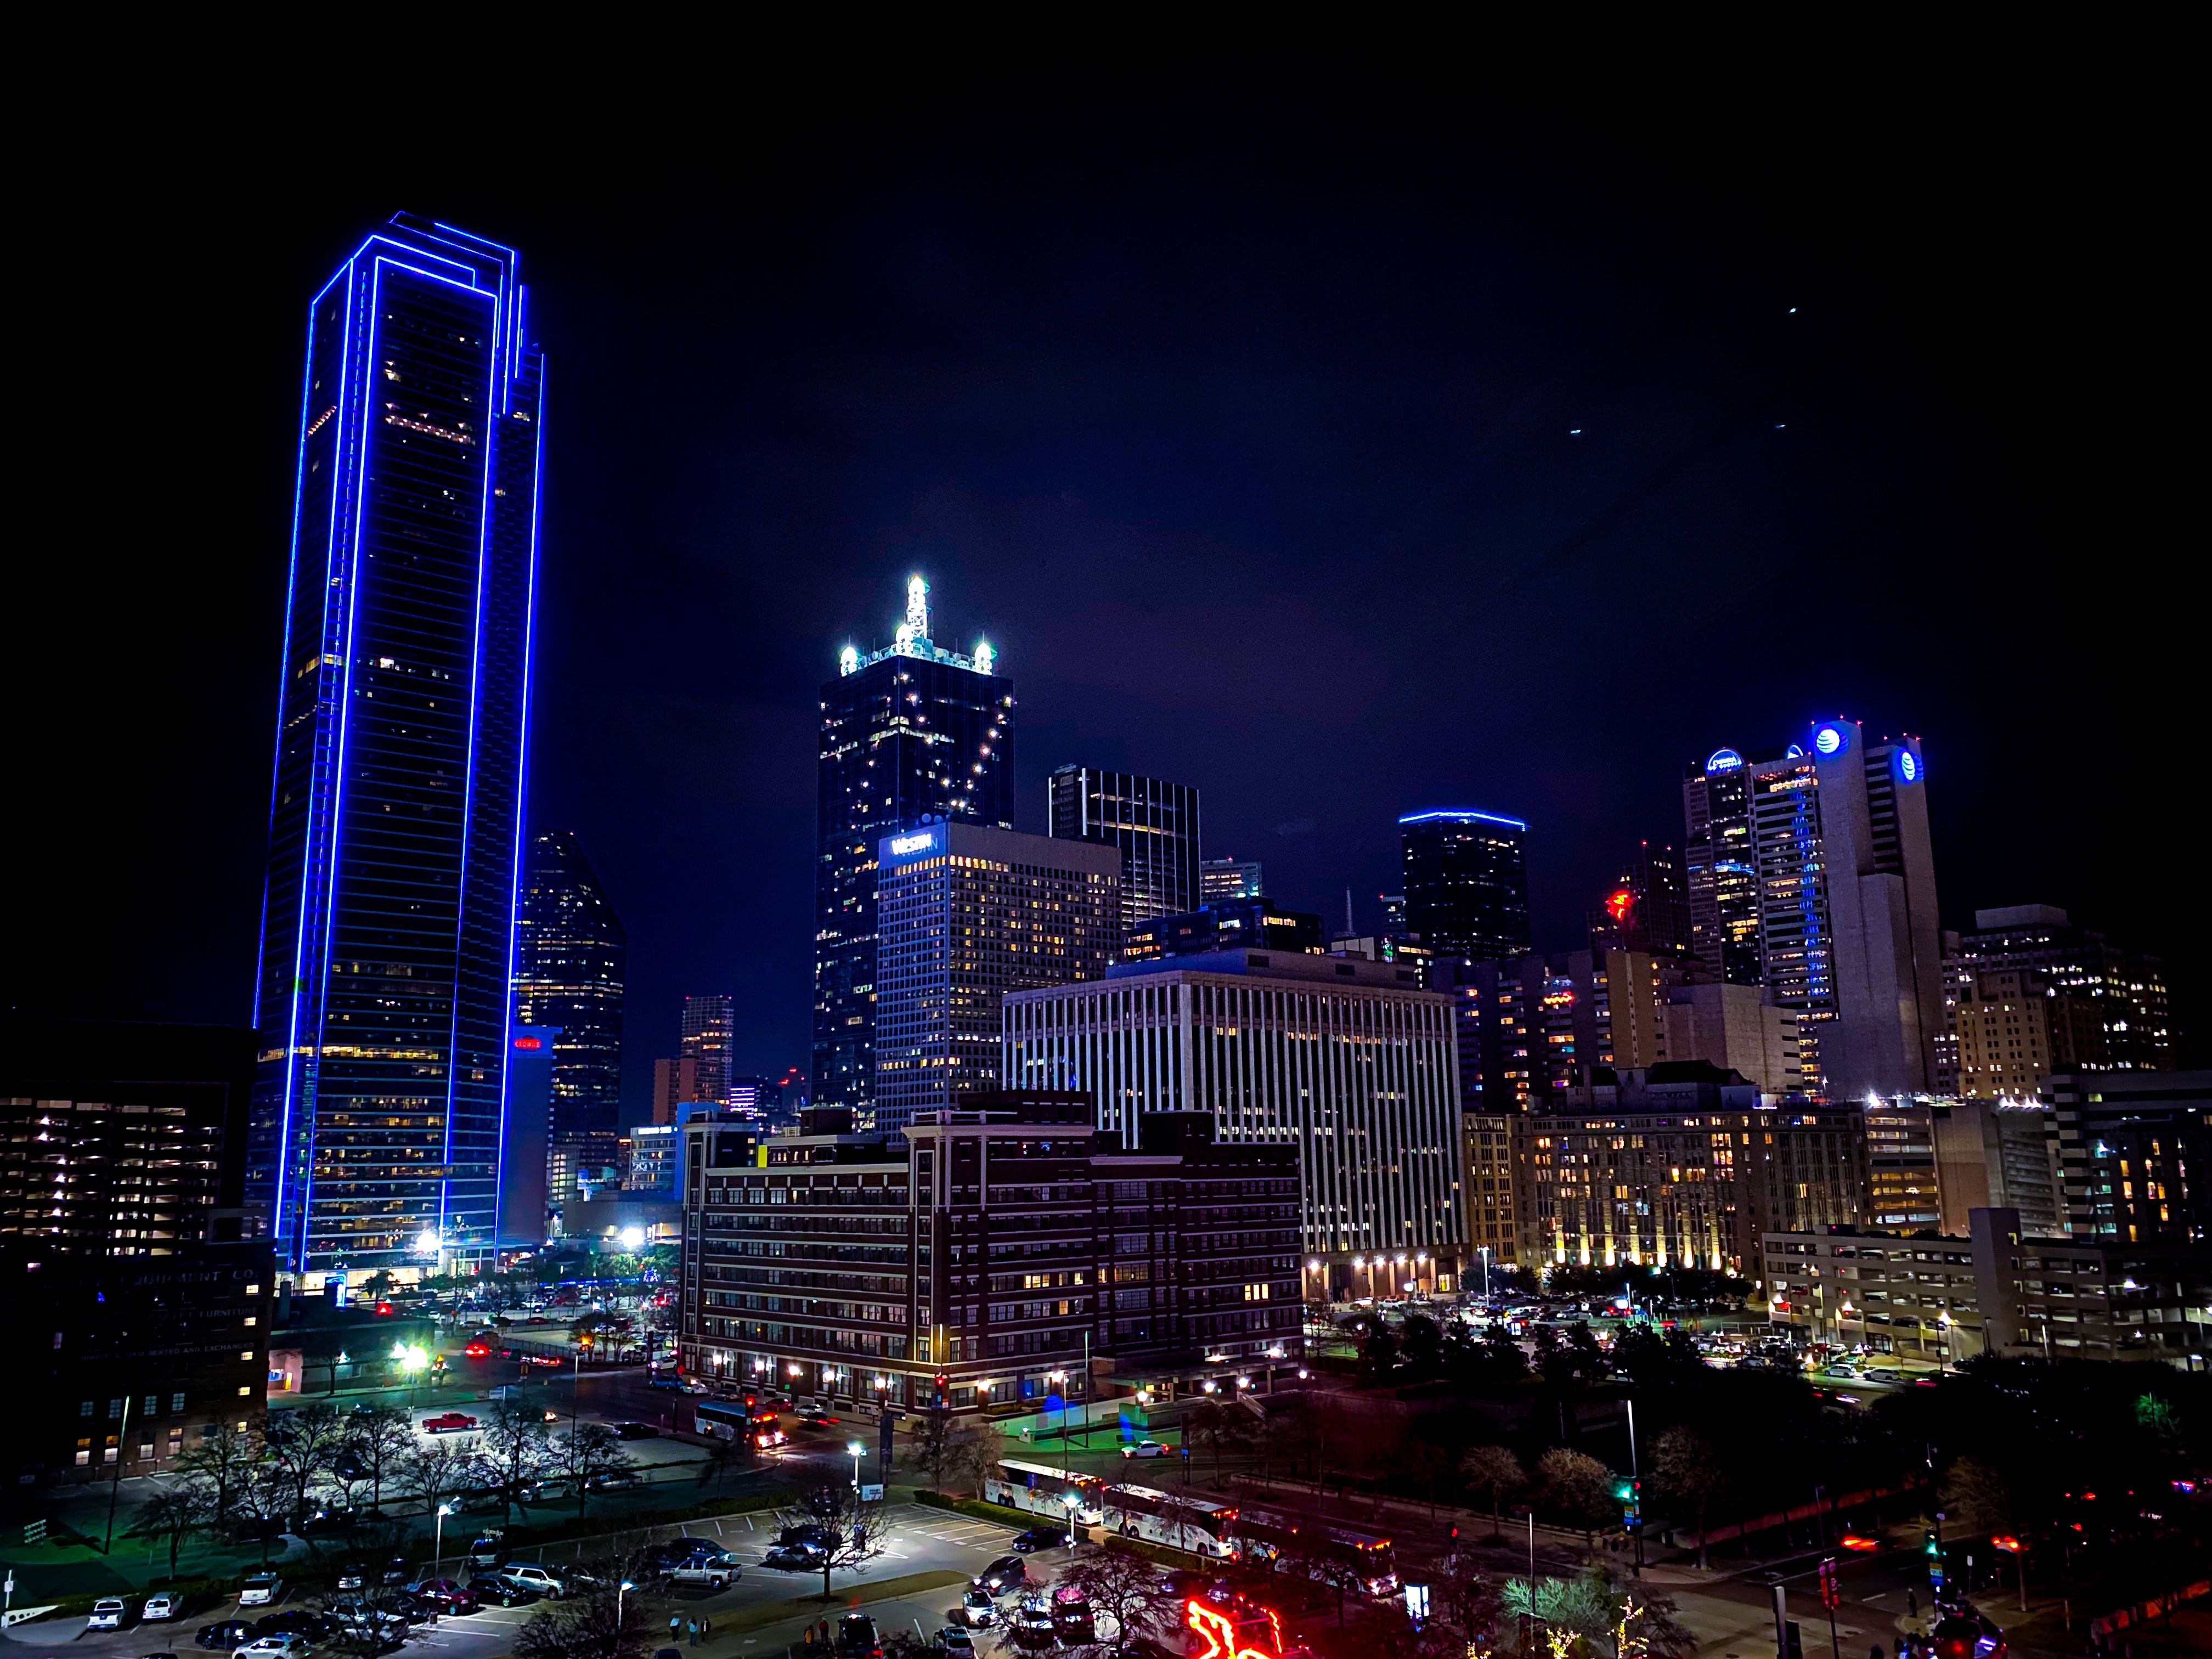 Downtown Dallas by night; image by Zack Brame, via Unsplash.com.